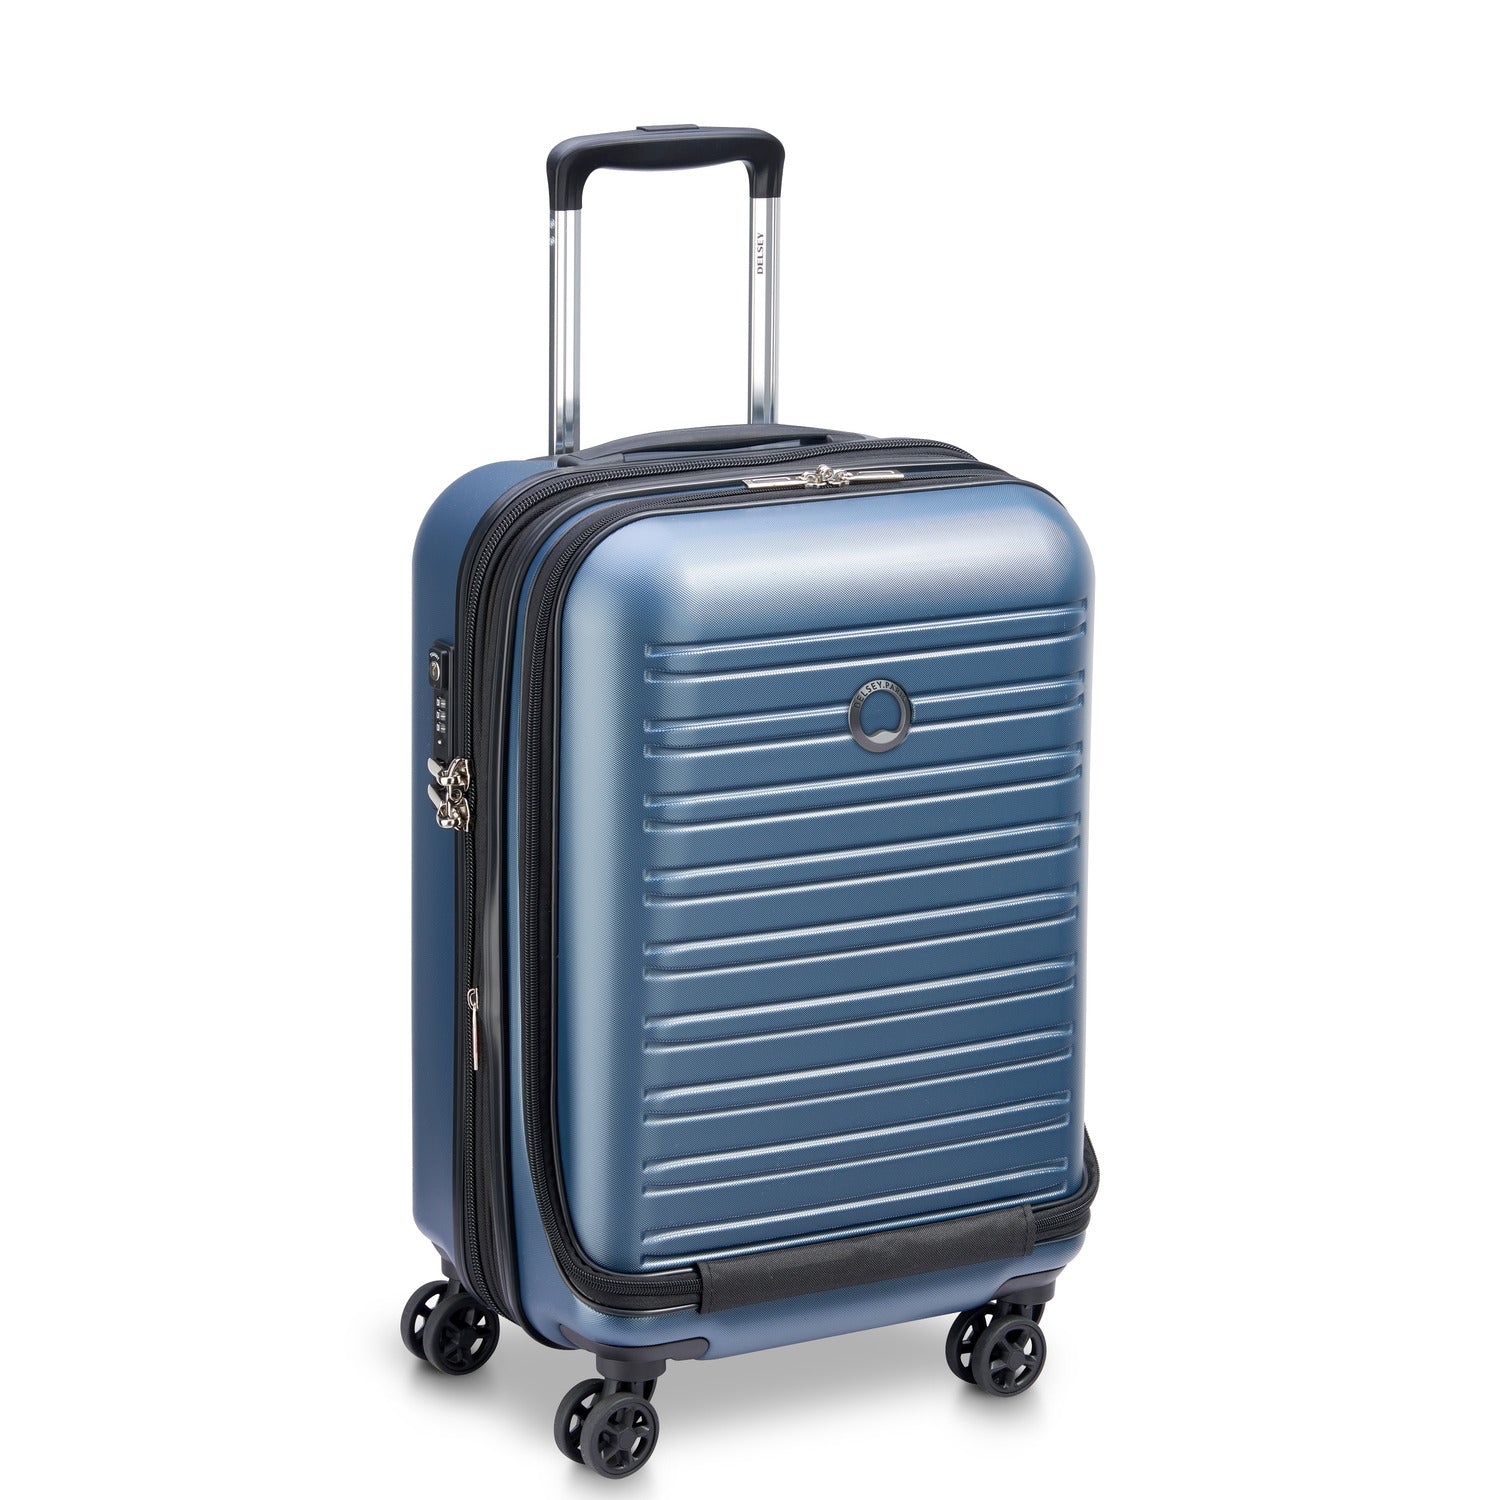 Delsey Segur 2.0 55cm Hardcase 4 Double Wheel Expandable Cabin Luggage Trolley Case Blue - 205880202